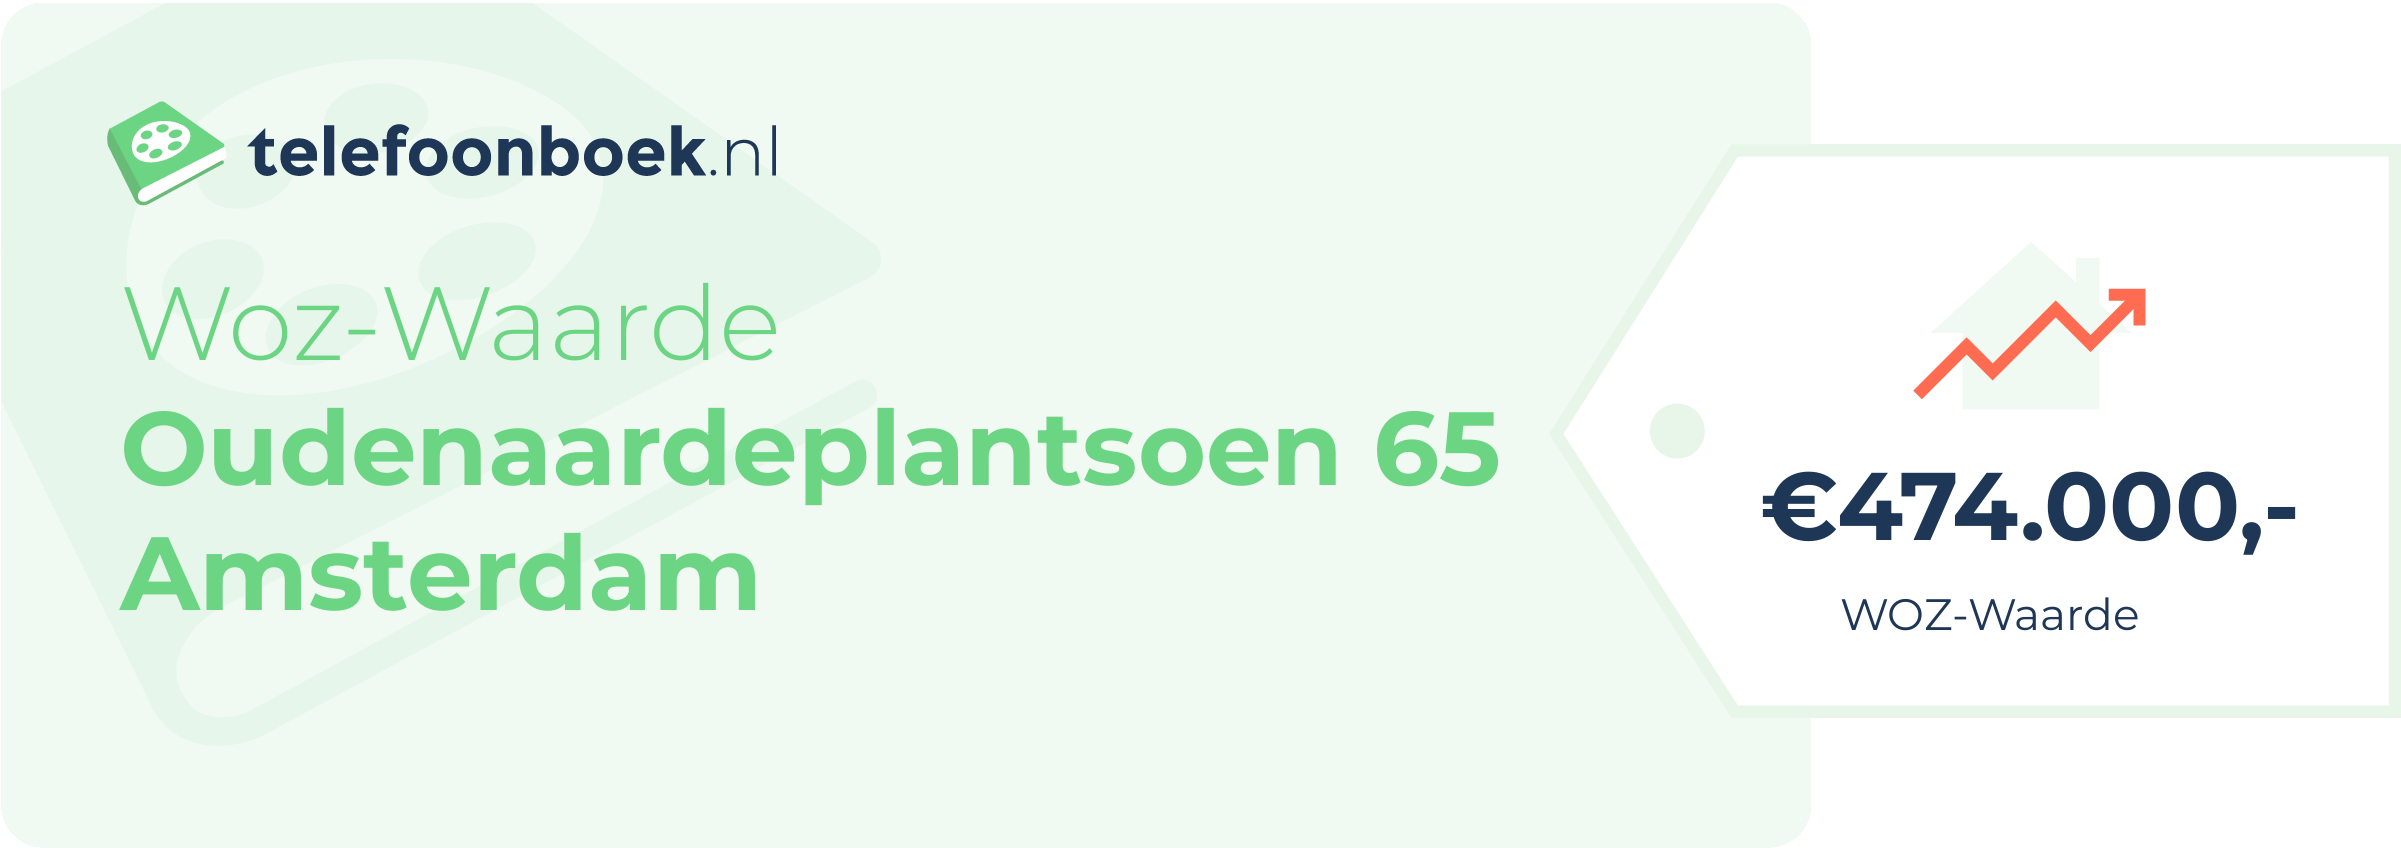 WOZ-waarde Oudenaardeplantsoen 65 Amsterdam